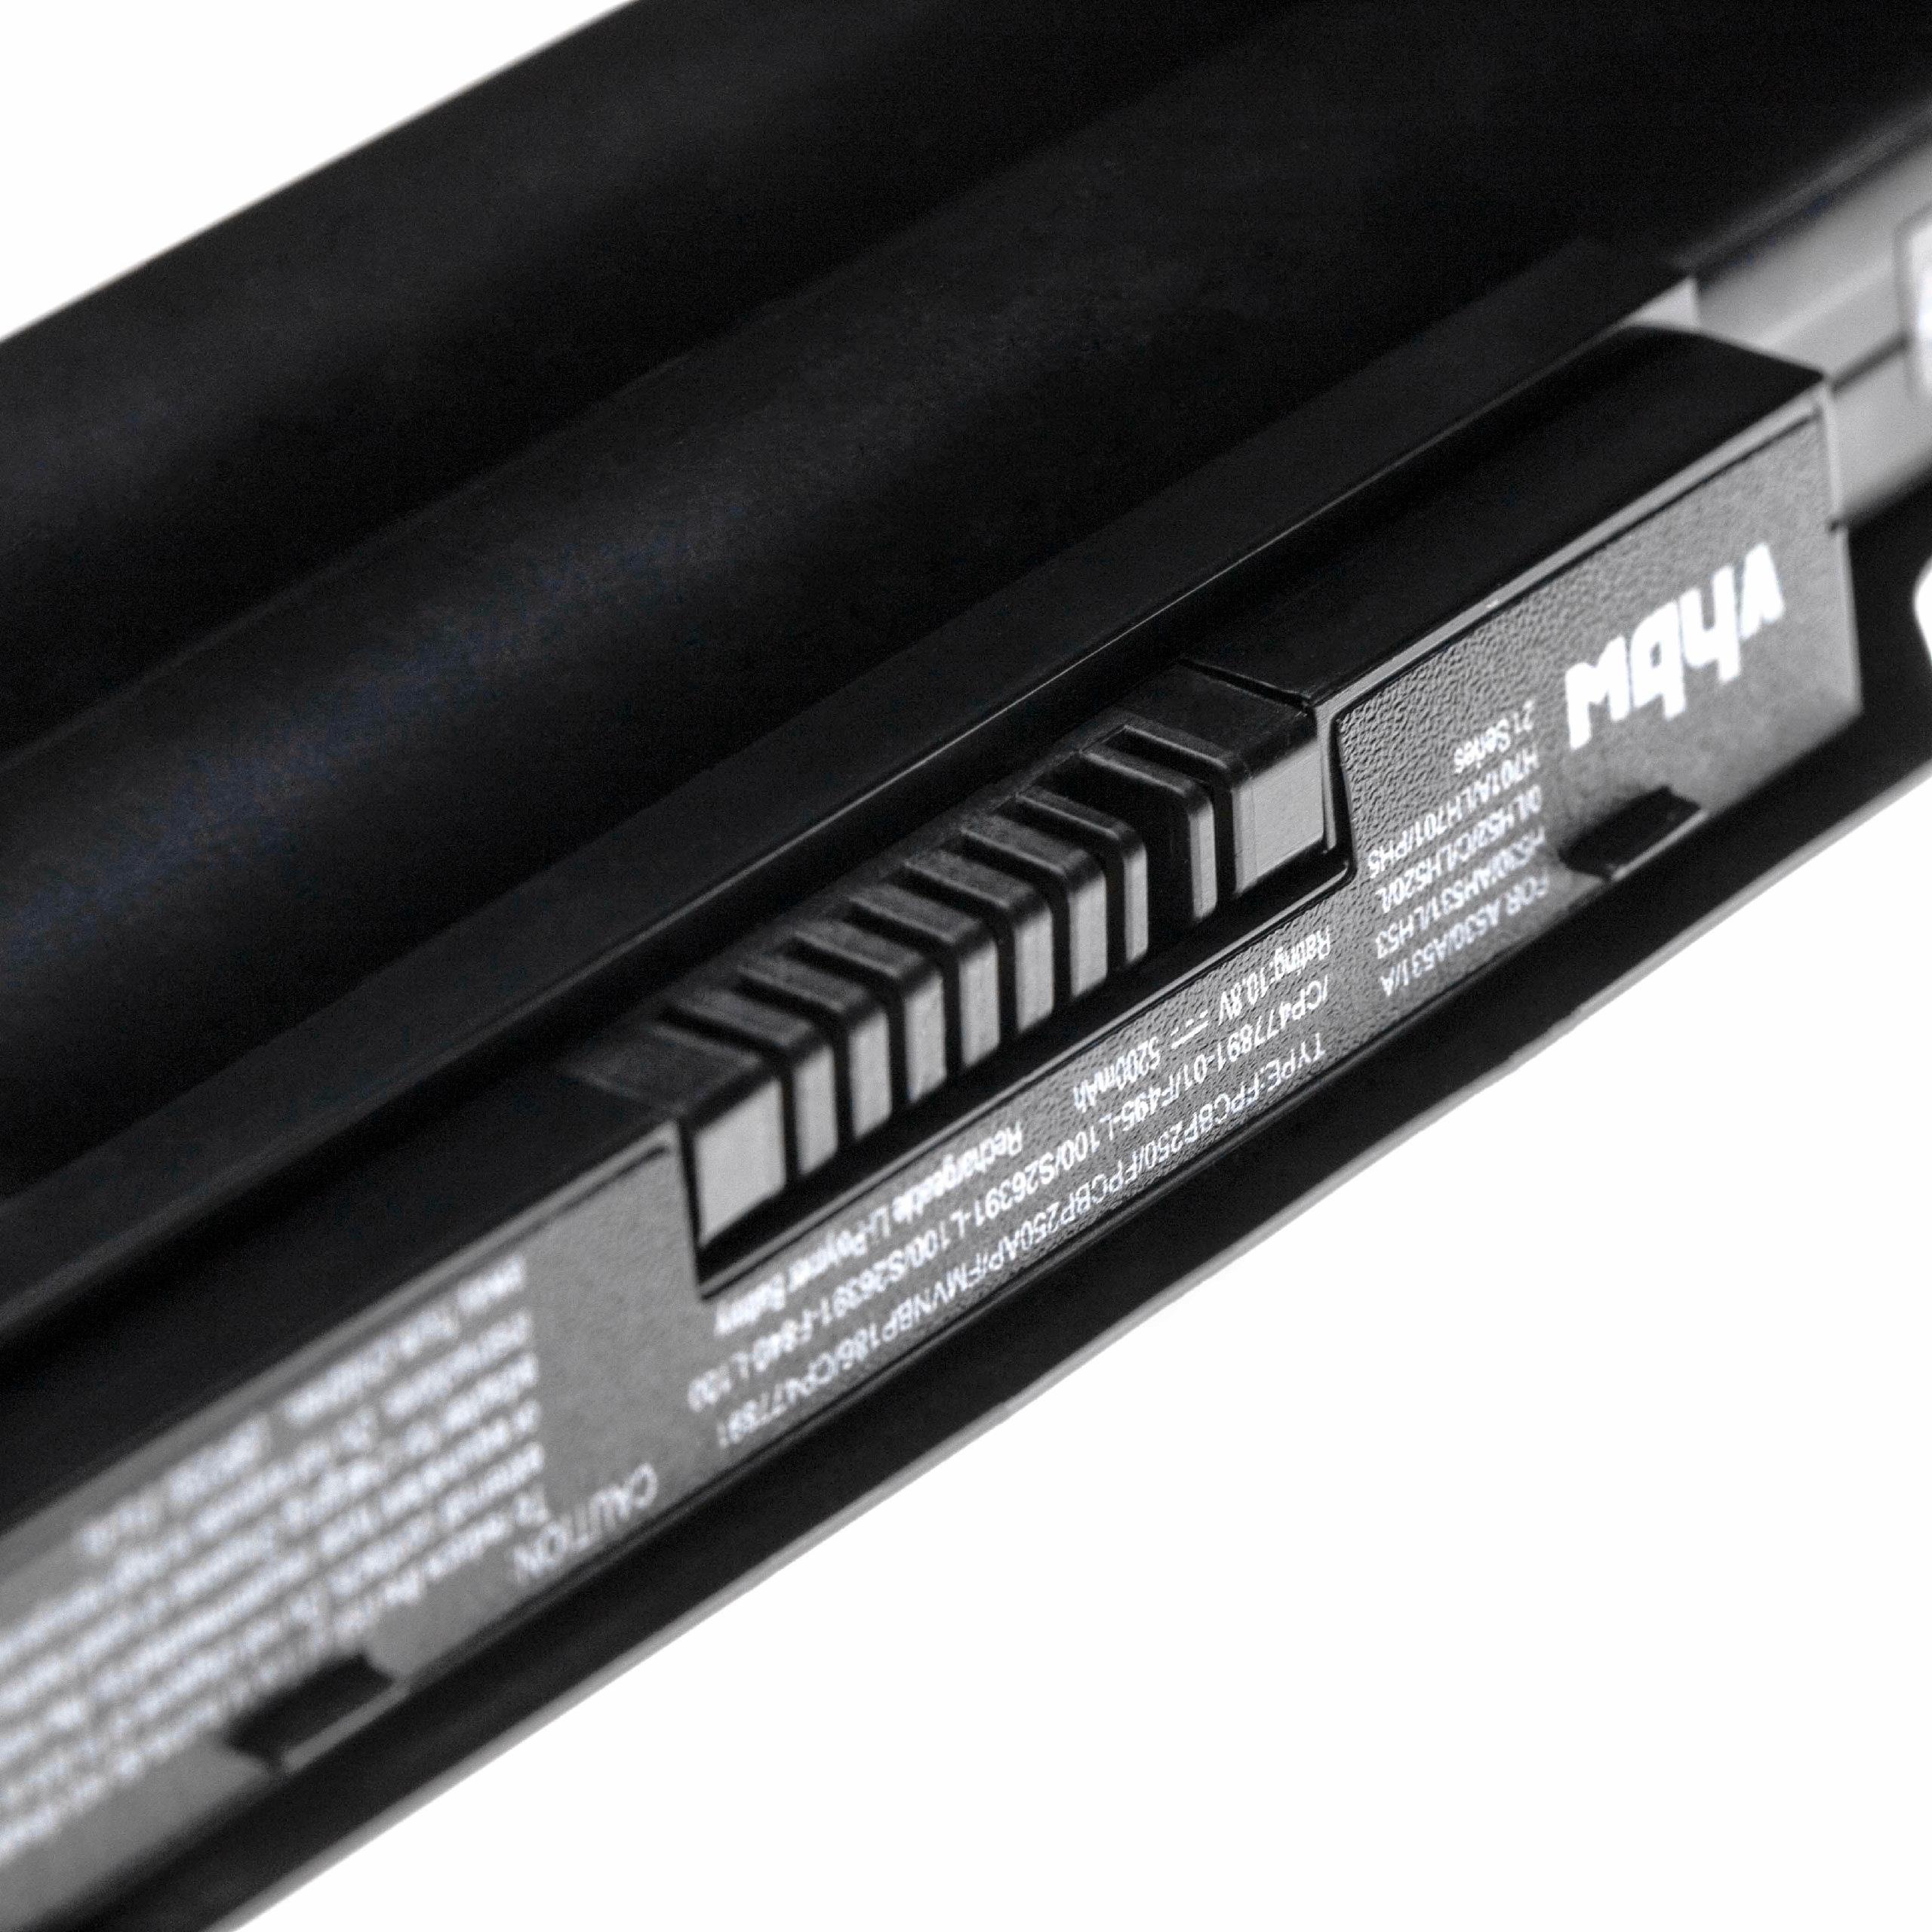 Notebook Battery Replacement for Fujitsu Siemens CP477891-03, CP477891-01 - 5200mAh 10.8V Li-polymer, black